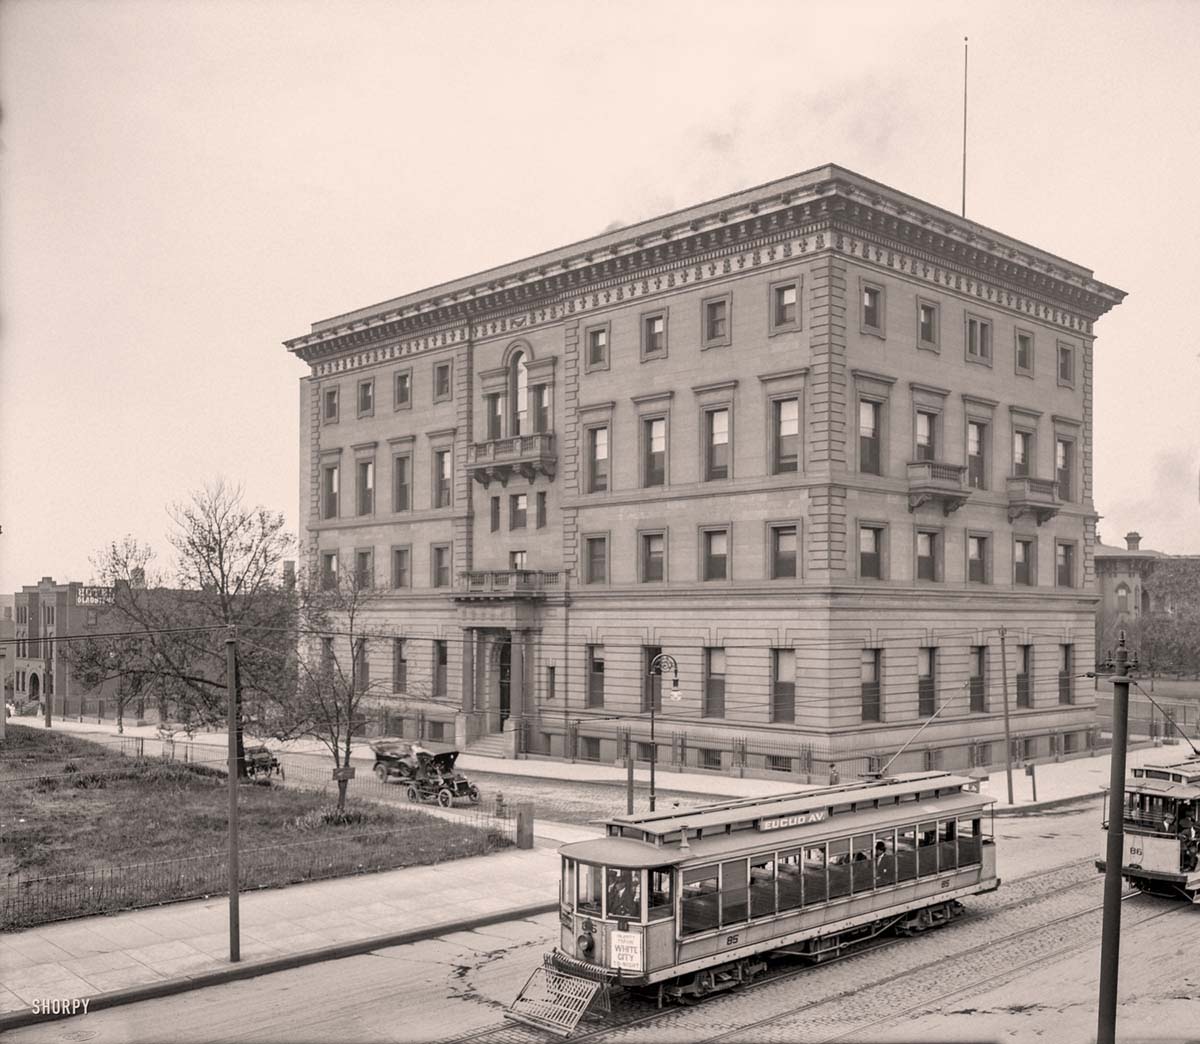 Cleveland. Union League Club building, circa 1905